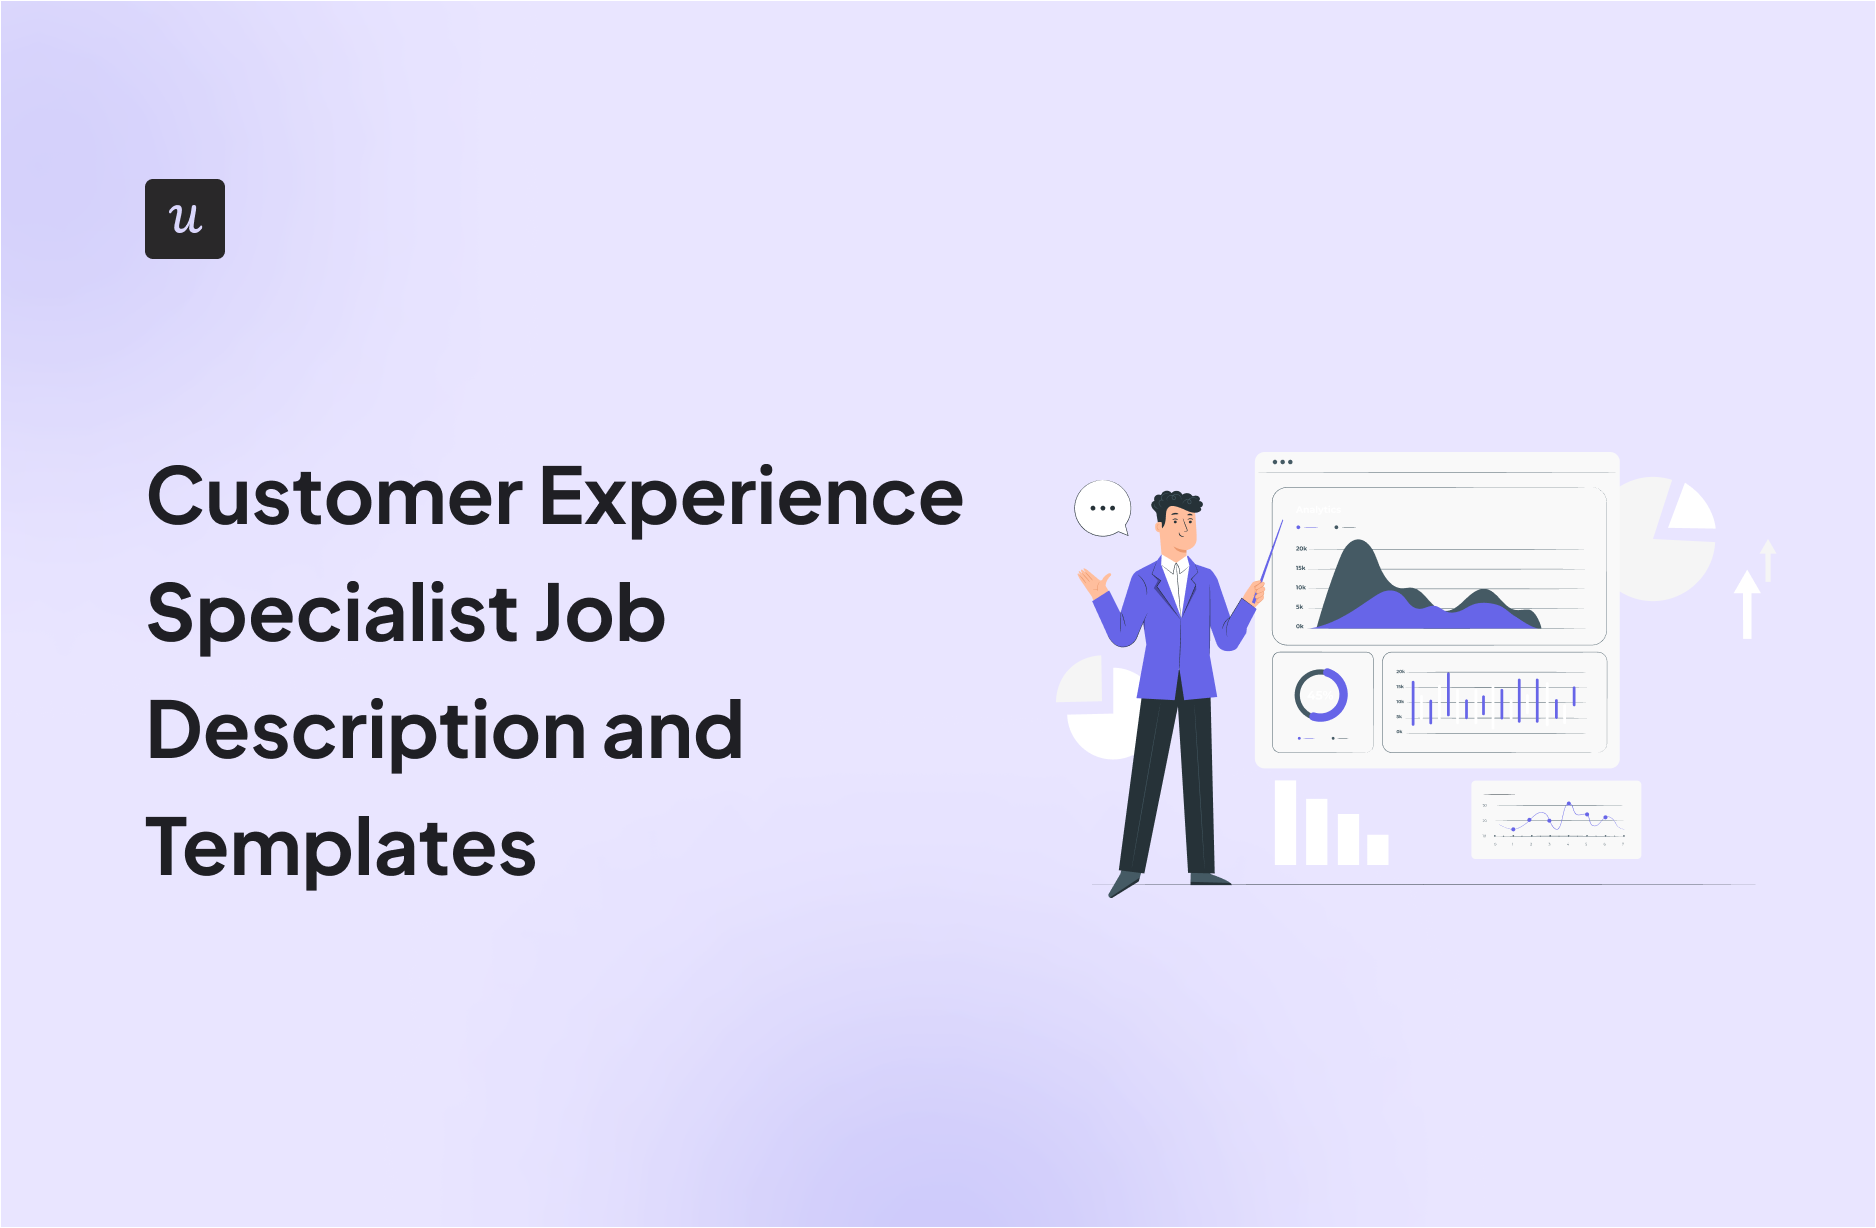 Customer Experience Specialist Job Description and Templates